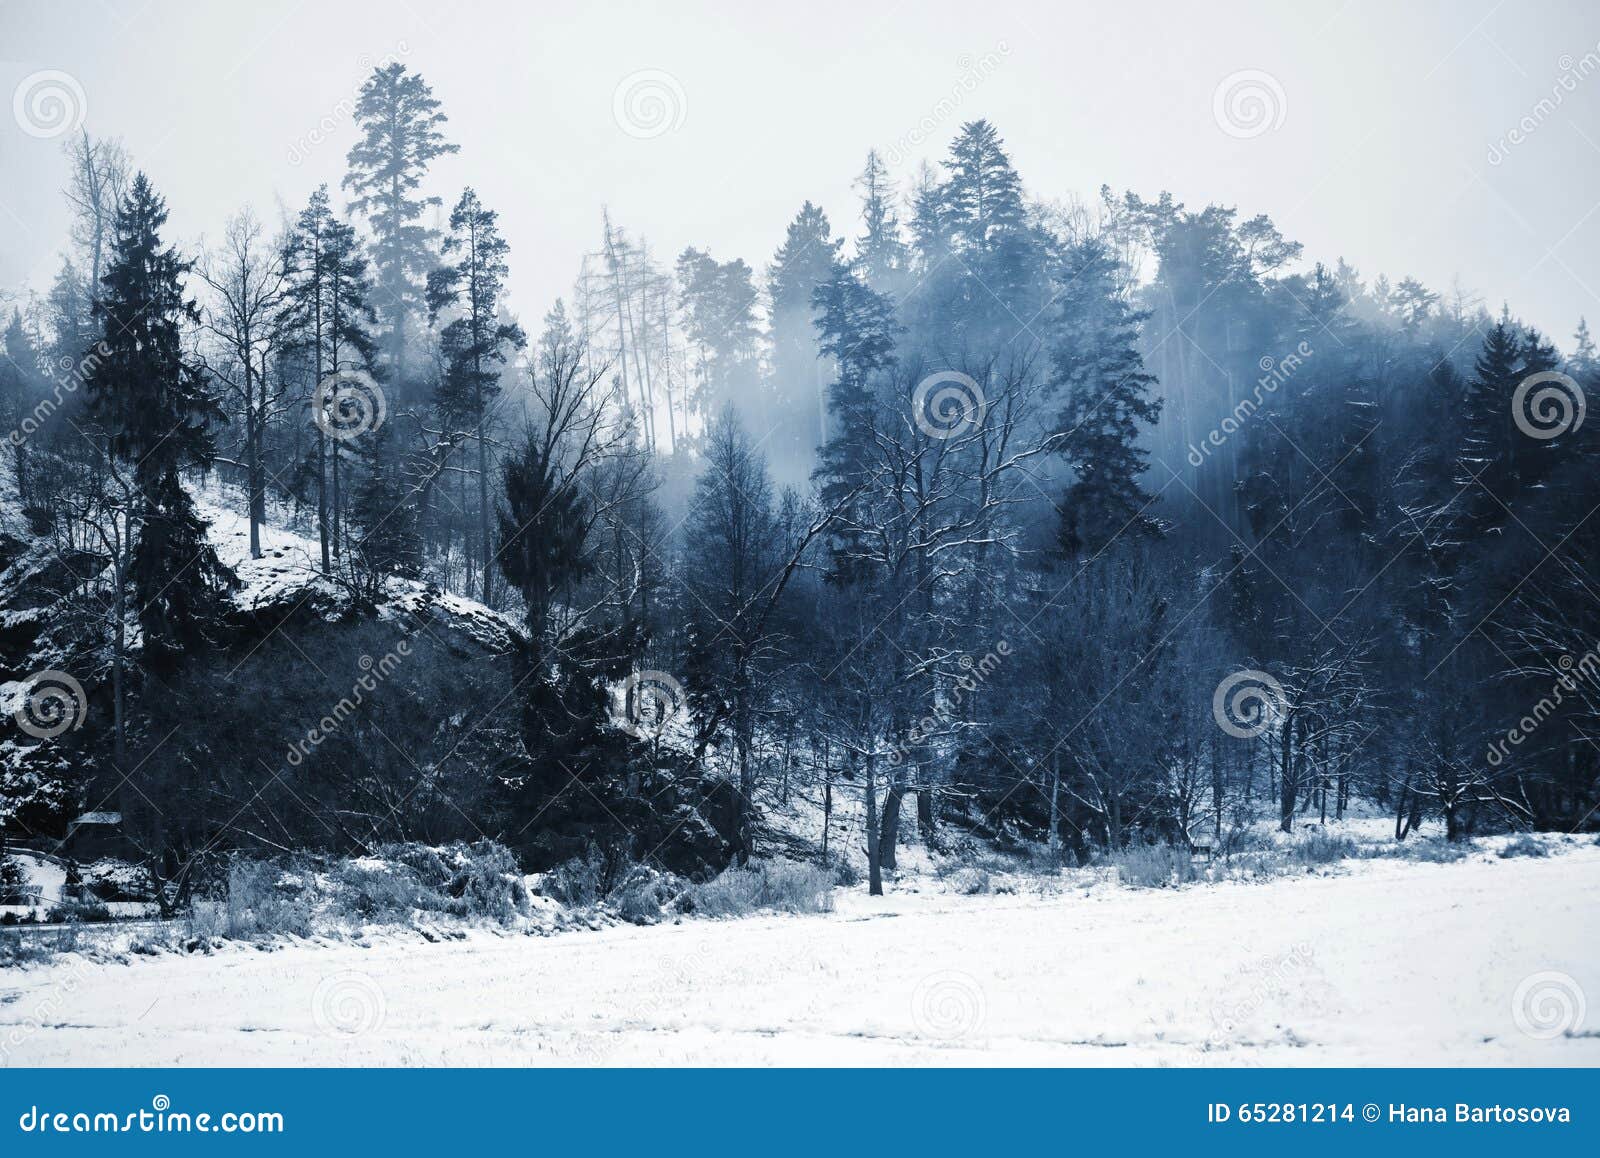 romantic restful snowy woods